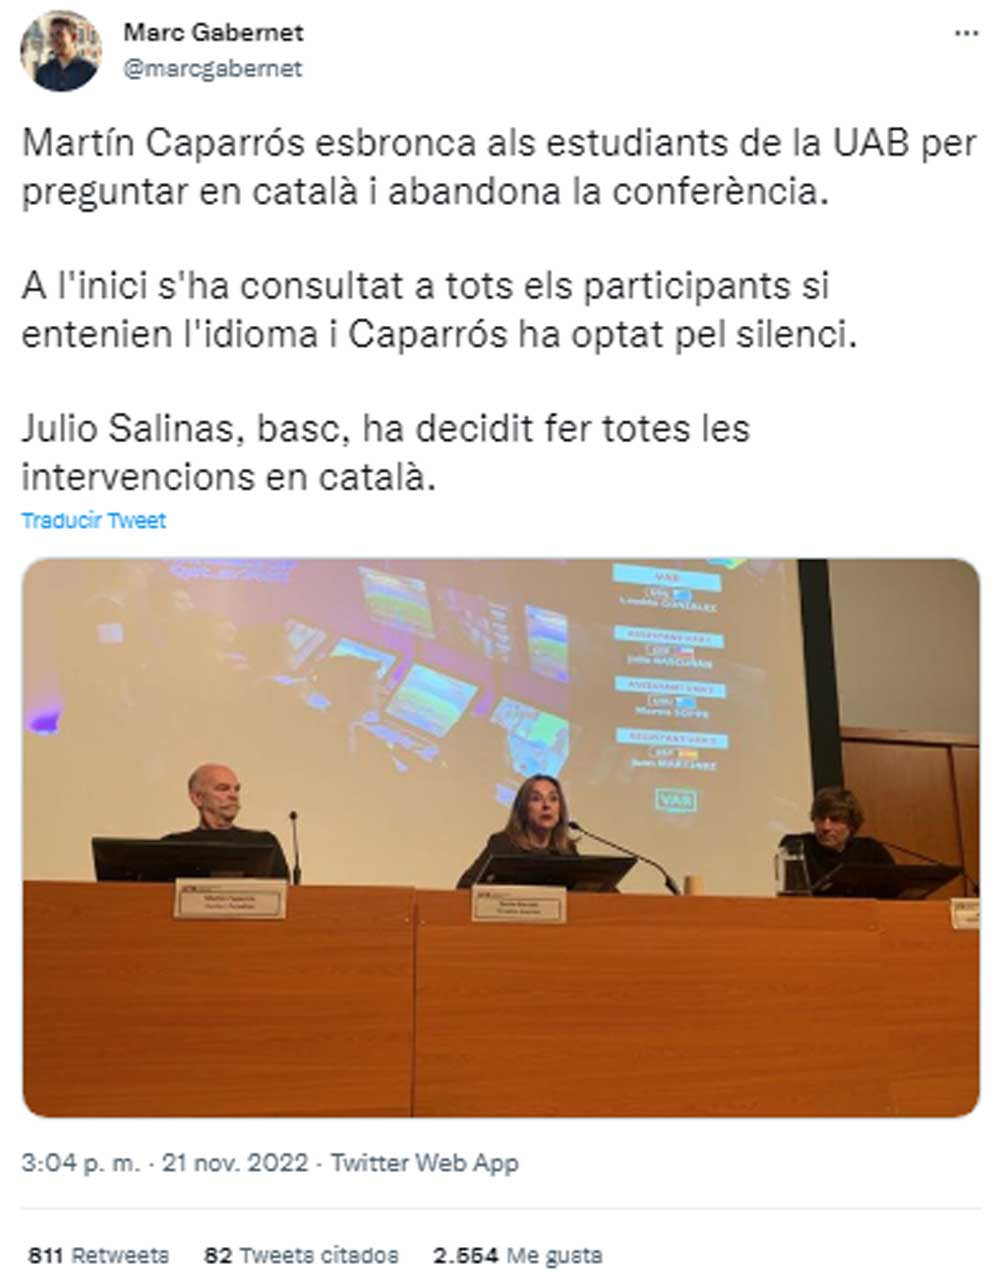 Marc Gabernet, criticando a Martín Caparrós en Twitter